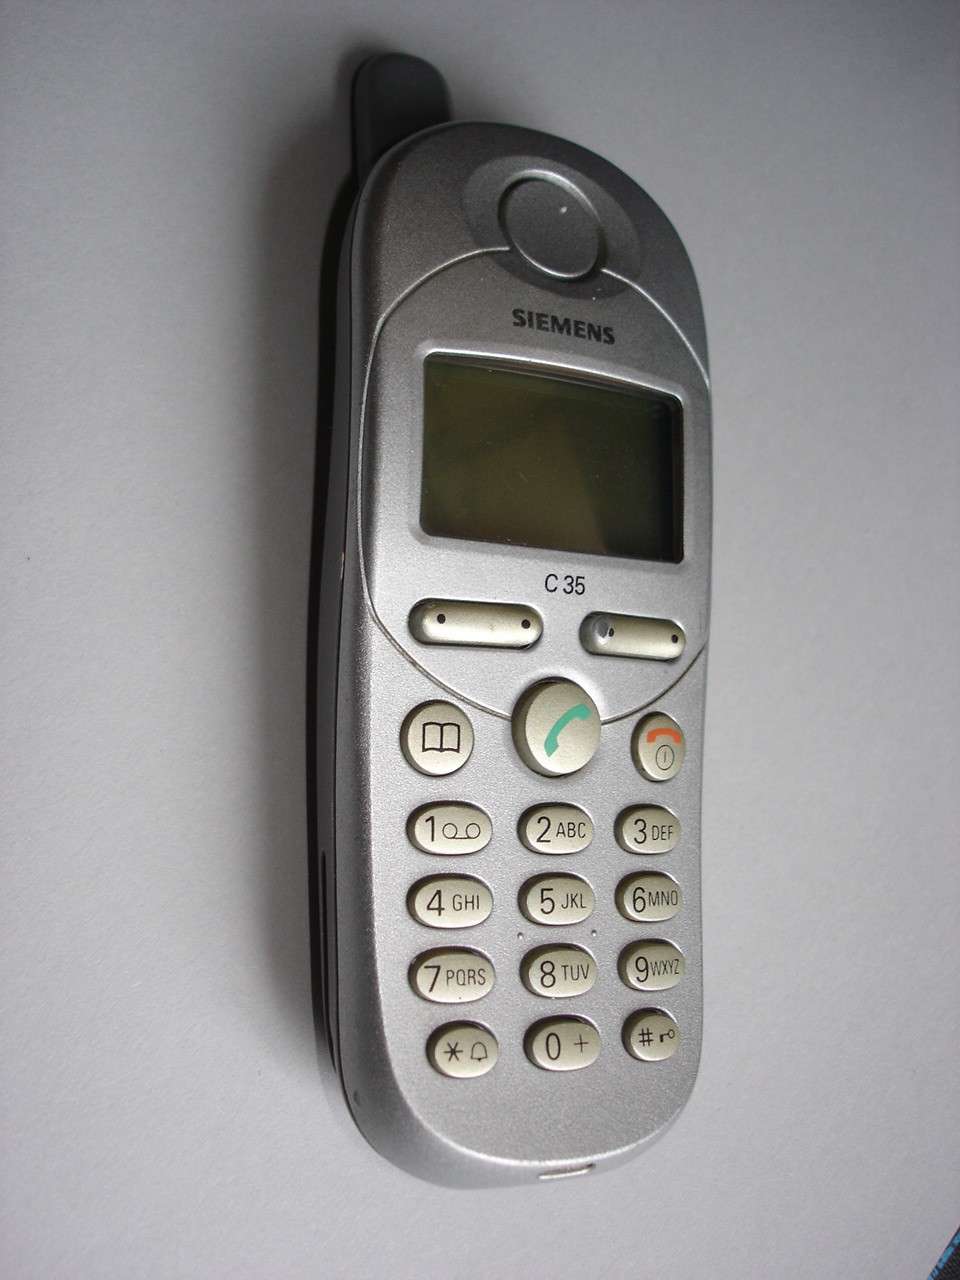 Siemens C35i mobiltelefon (Postamúzeum CC BY-NC-SA)